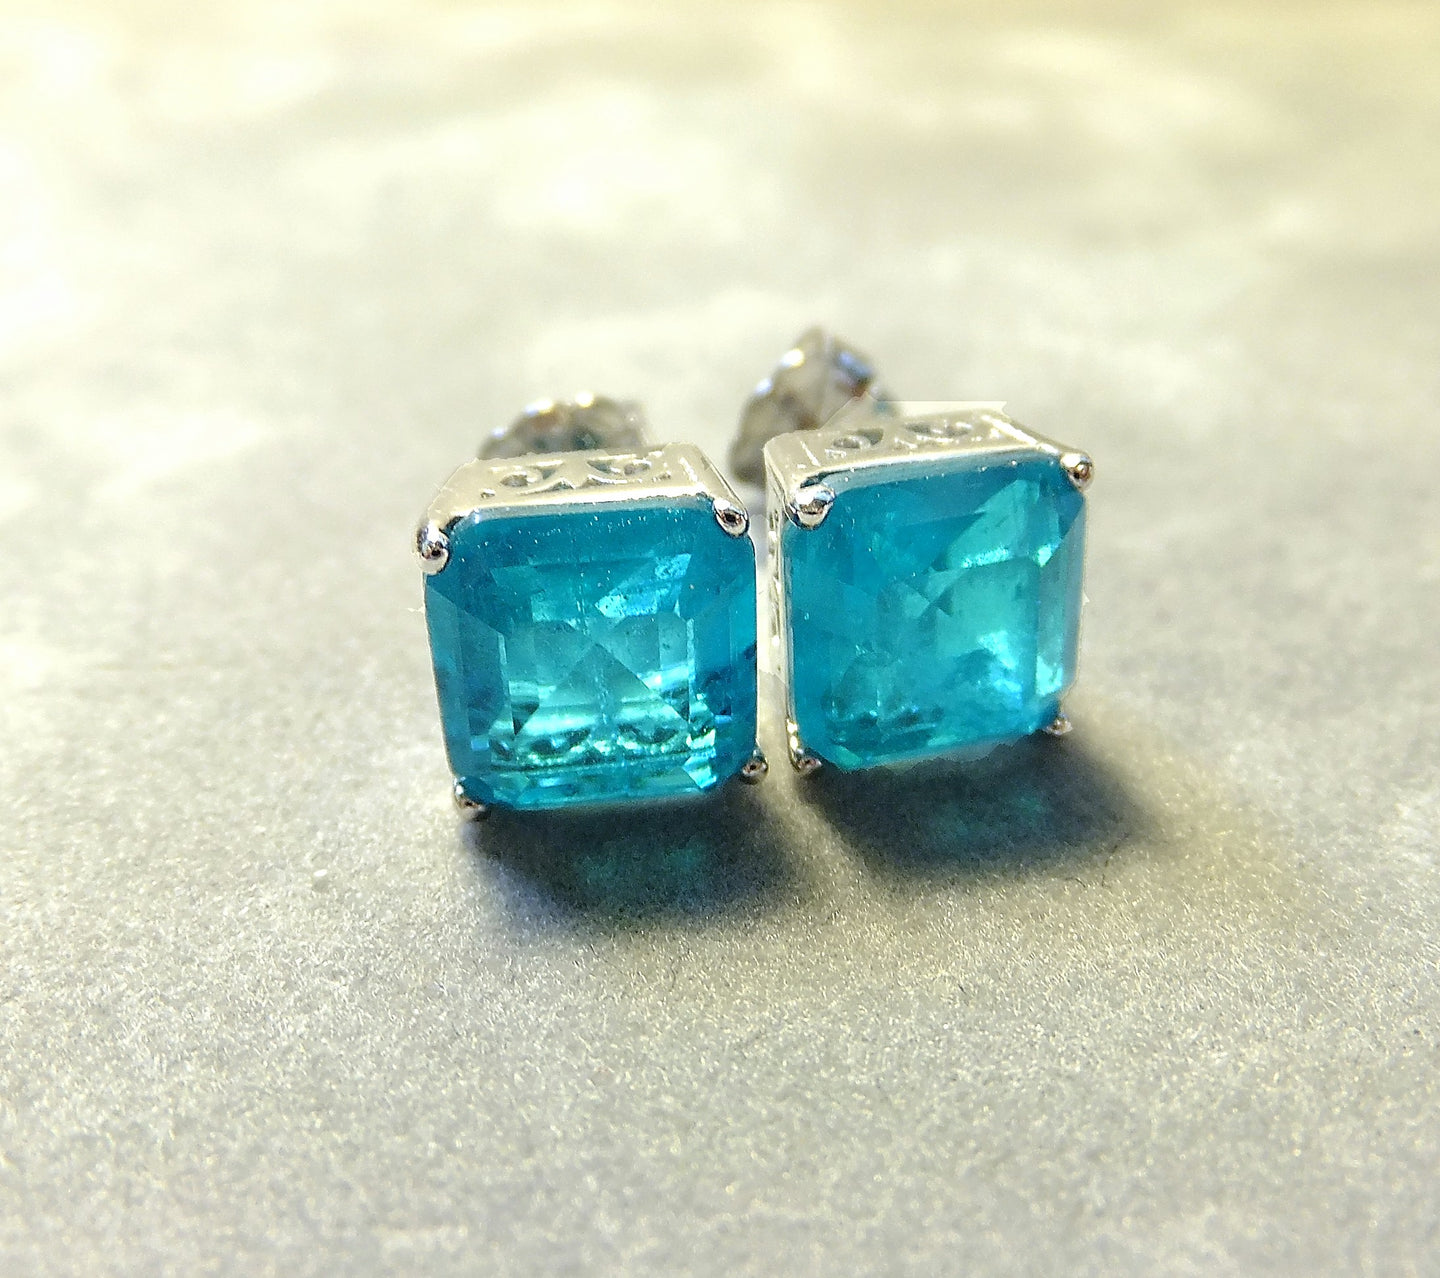 Neon Blue Paraiba Tourmaline earrings